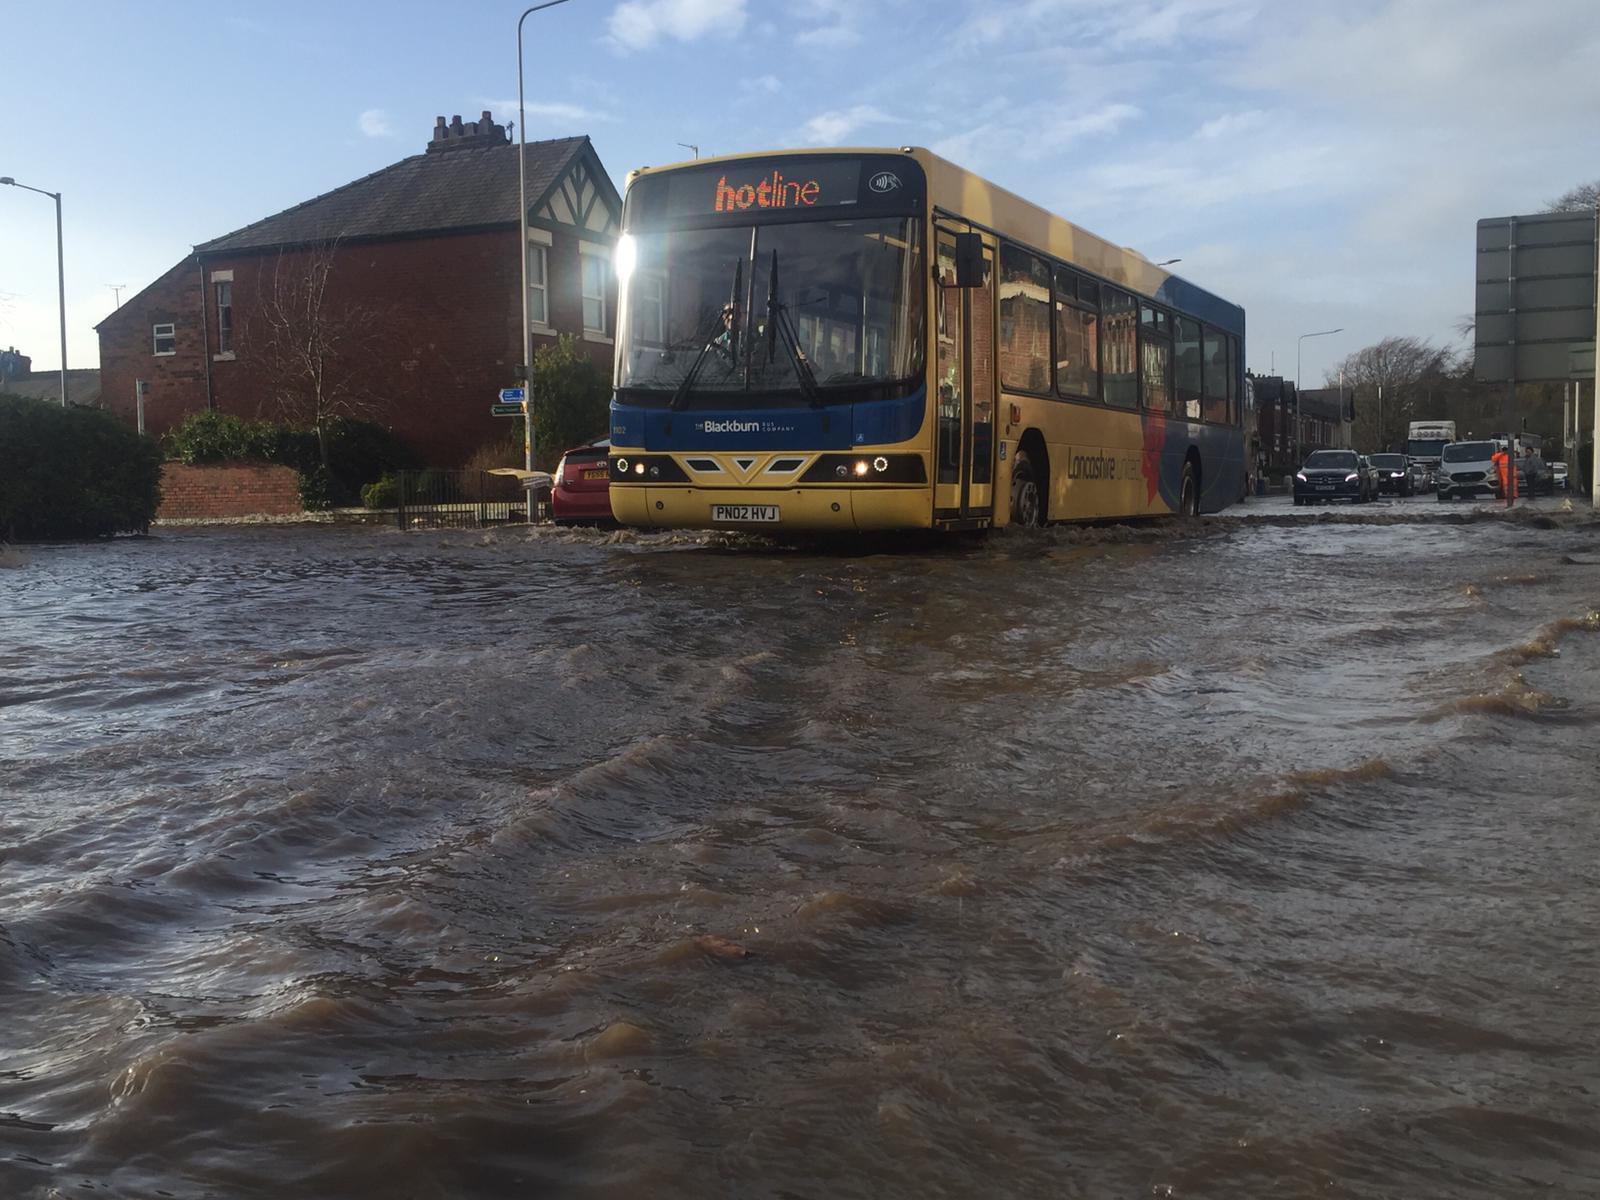 Bus services continue despite terrible conditions